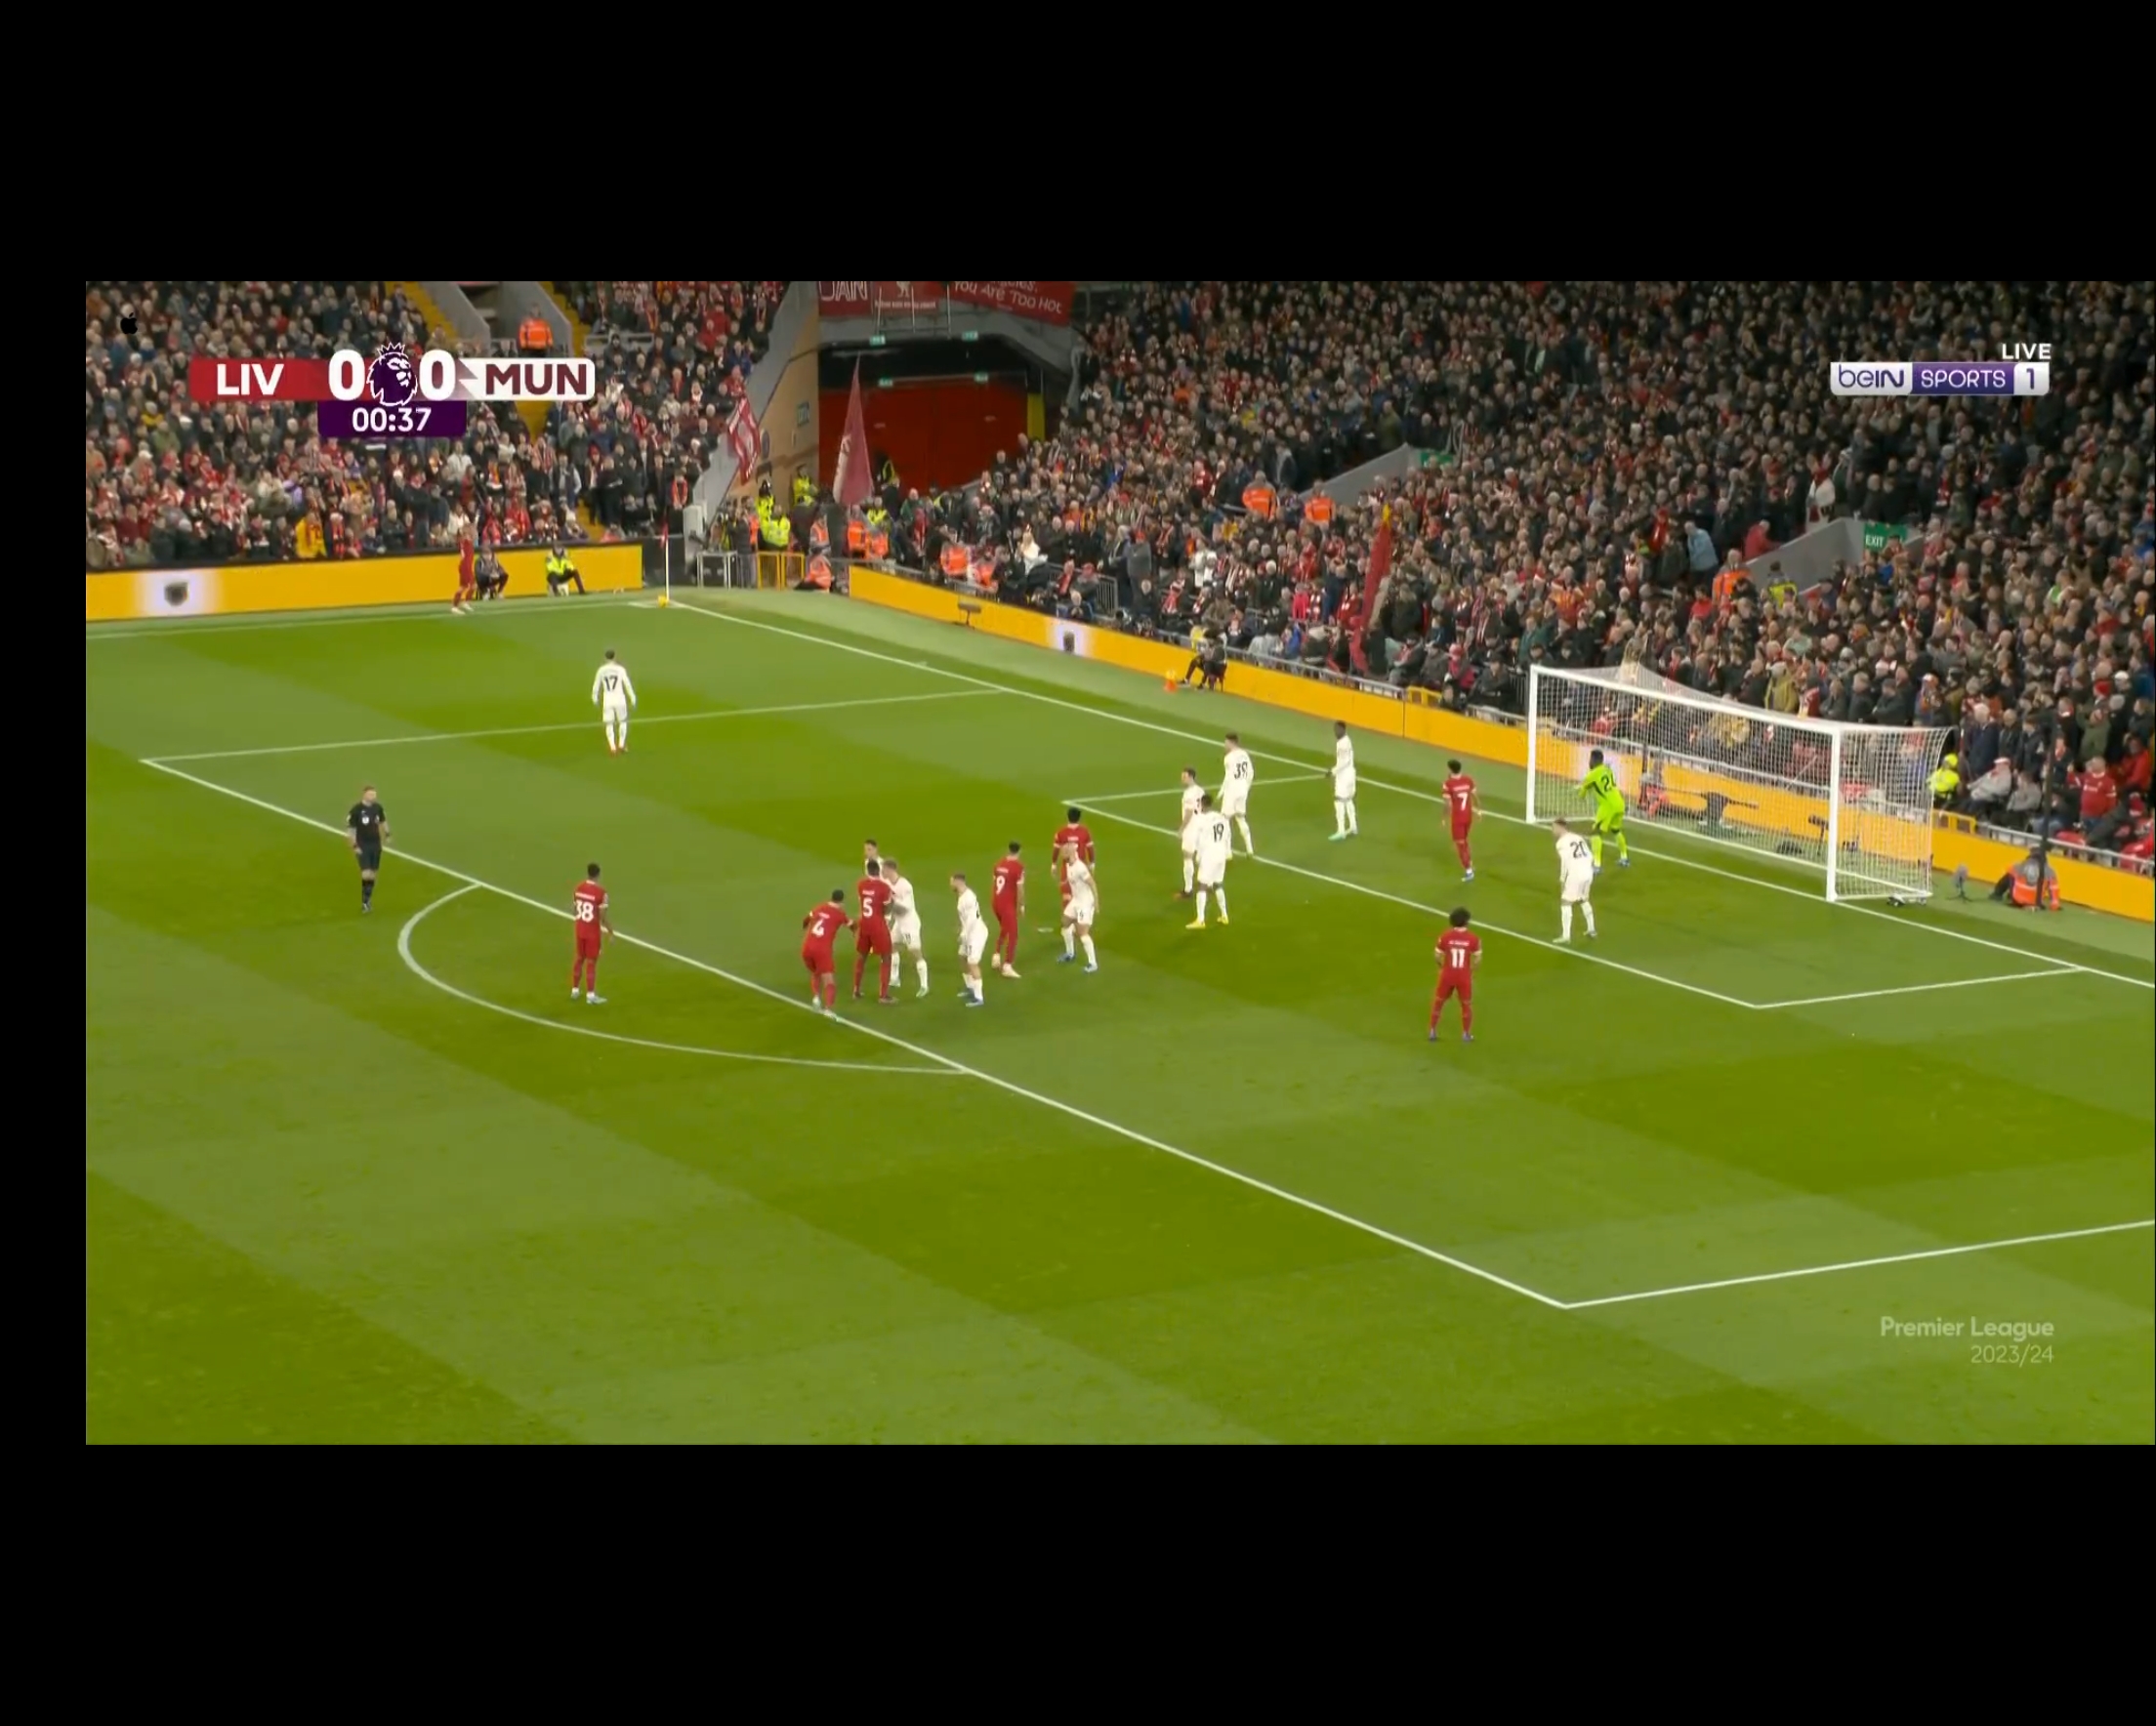 #Liverpool vs #Manchester United live stream